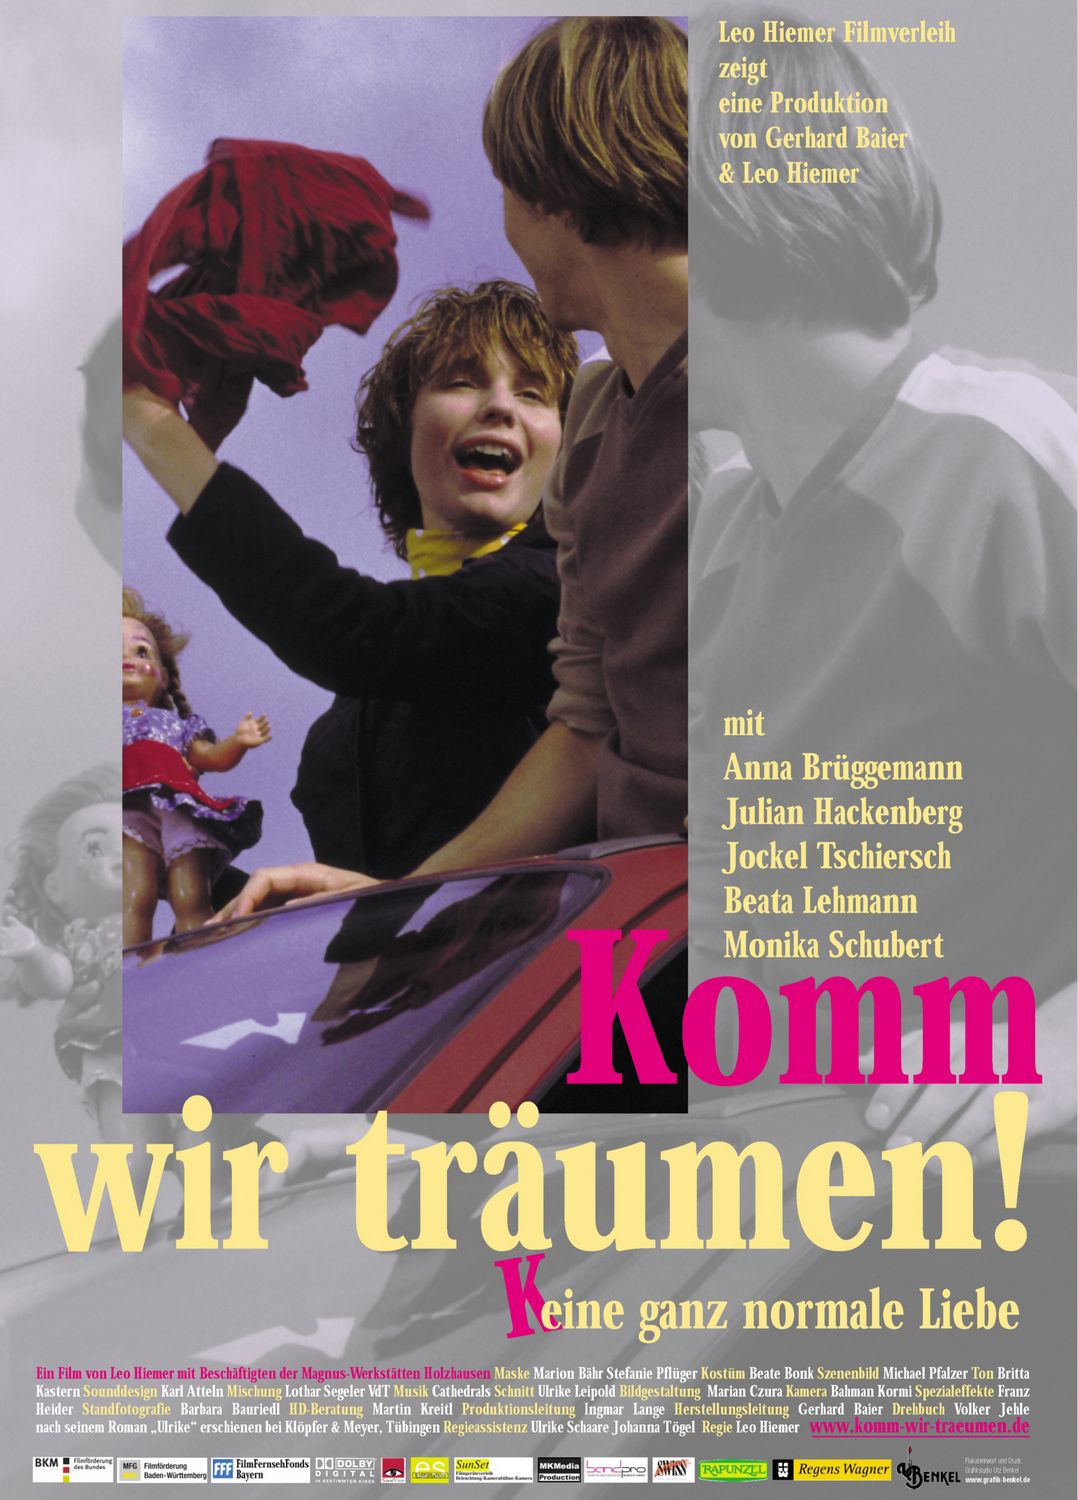 Extra Large Movie Poster Image for Komm, wir träumen! 